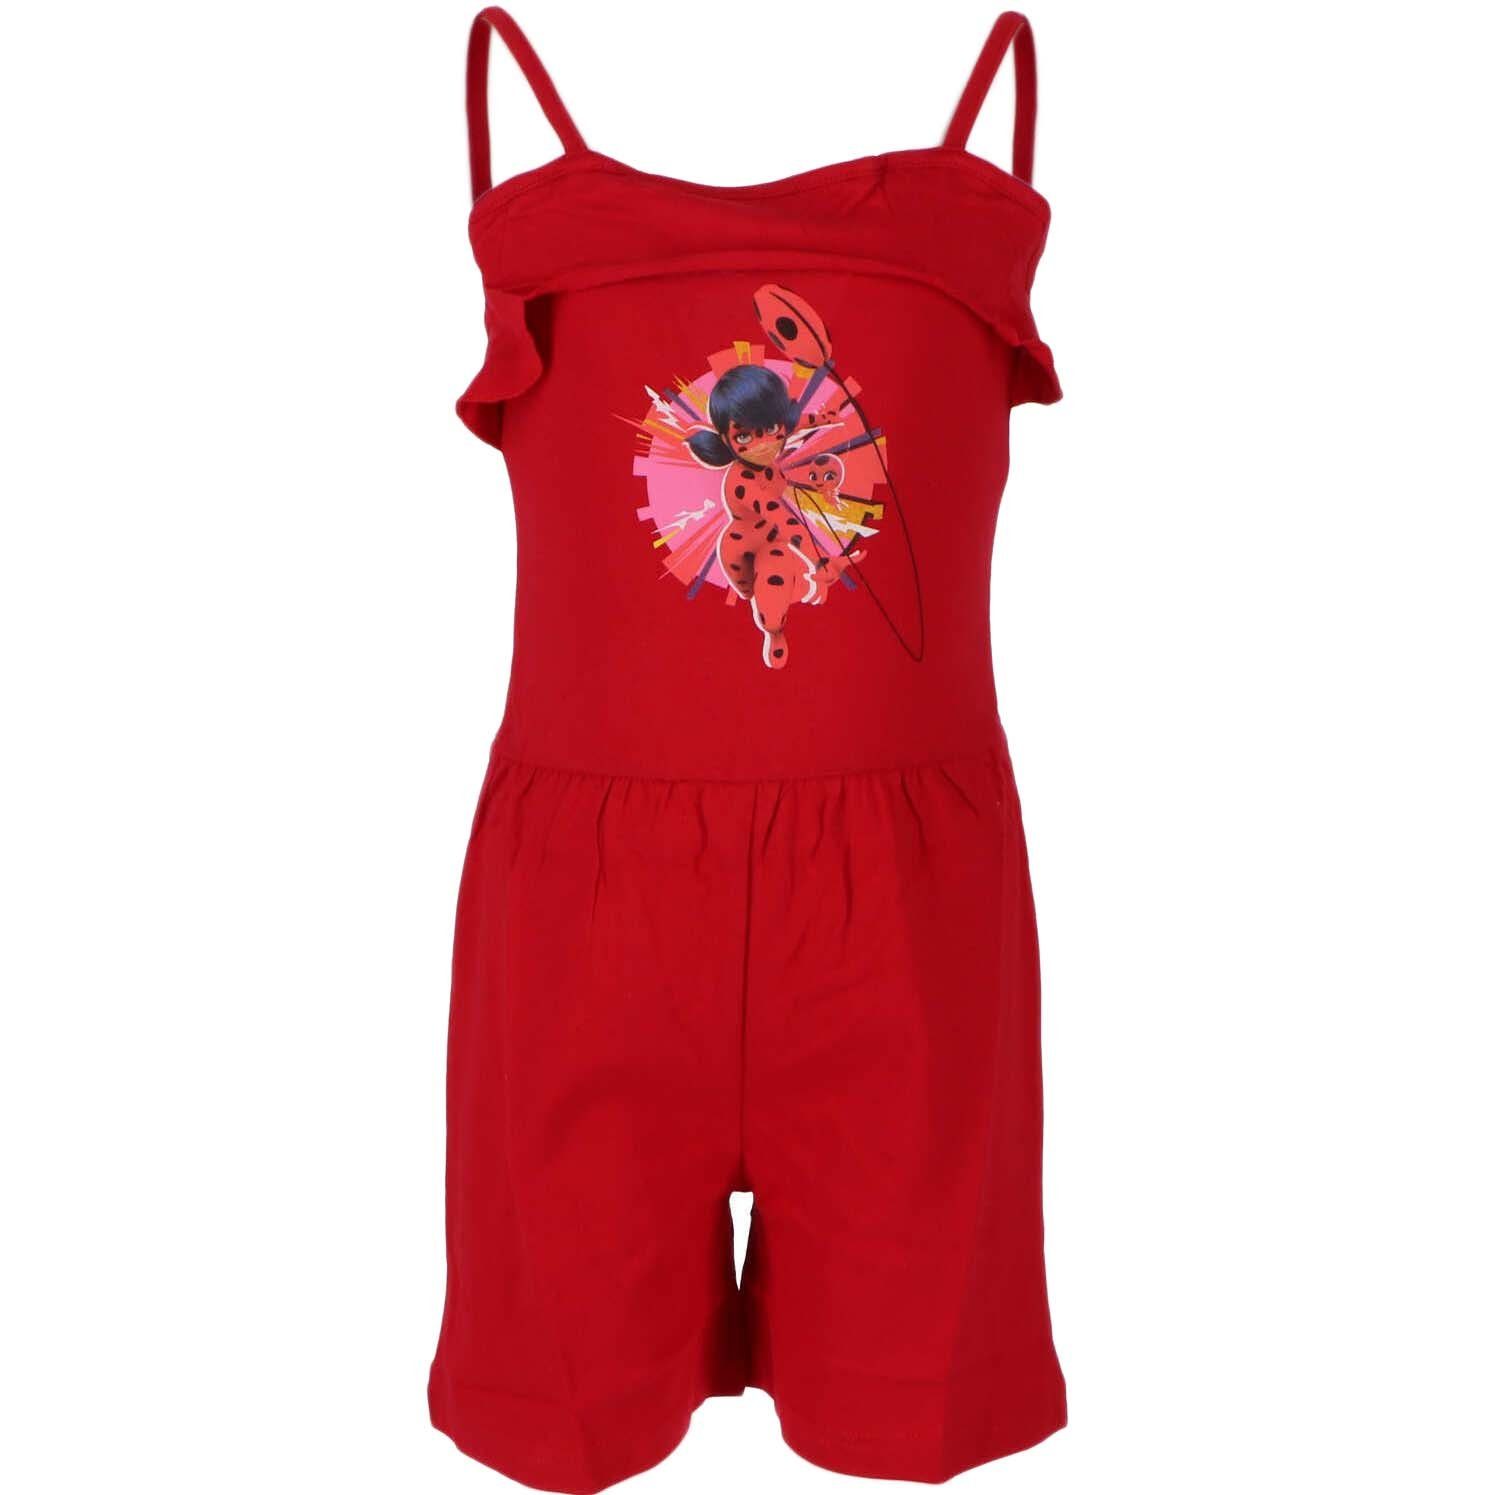 Baumwolle Rot Jumpsuit Miraculous bis Mädchen Kinder Anzug - 98 128, Ladybug 100% Gr.